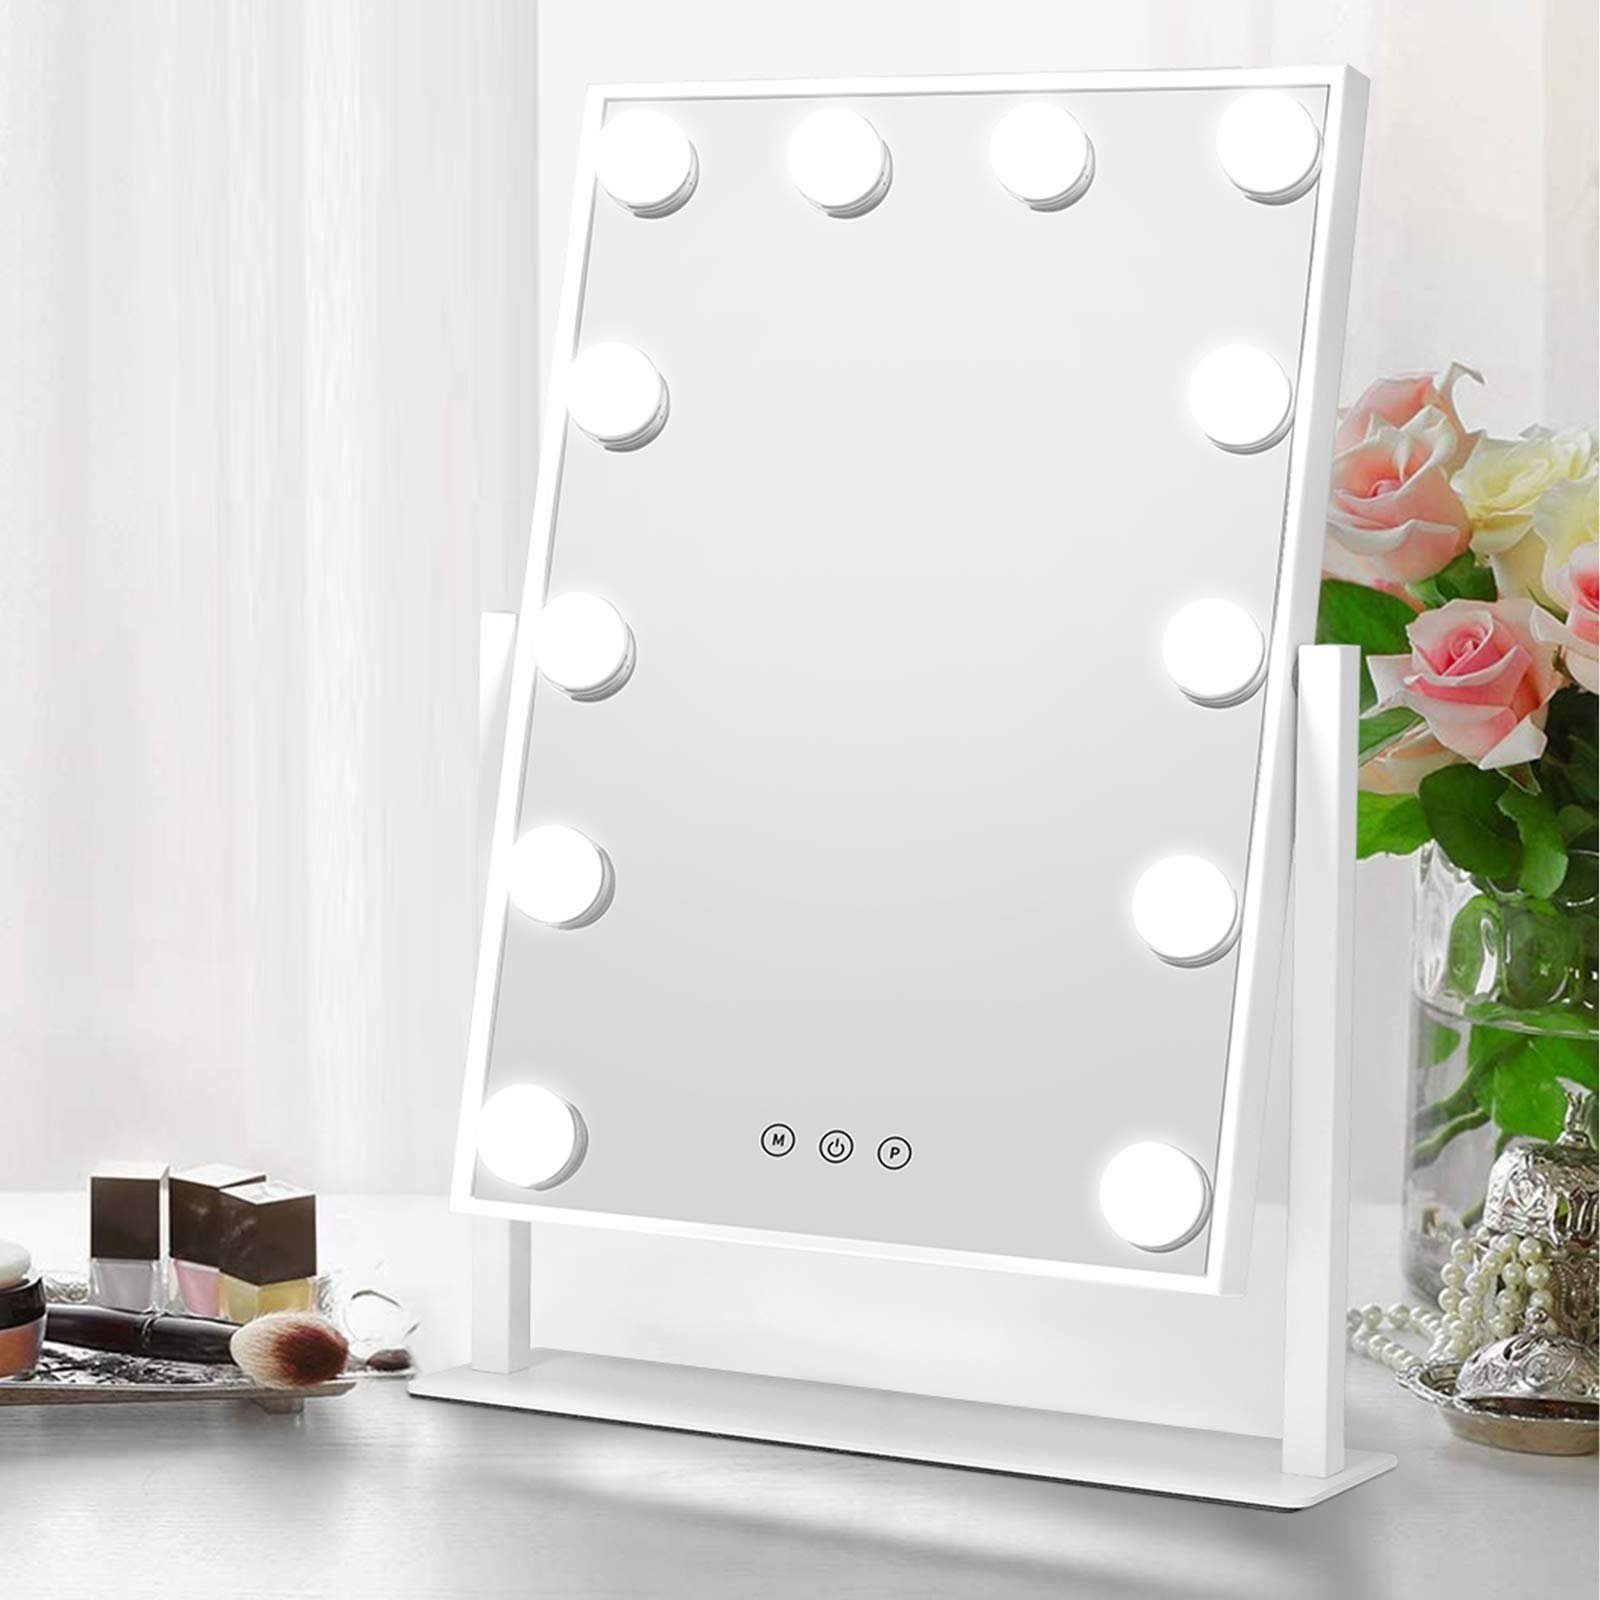 47 Kosmetikspiegel Schminkspiegel DOTMALL 3 35 12 LED-Lampen, × White mit cm Farbmodi,